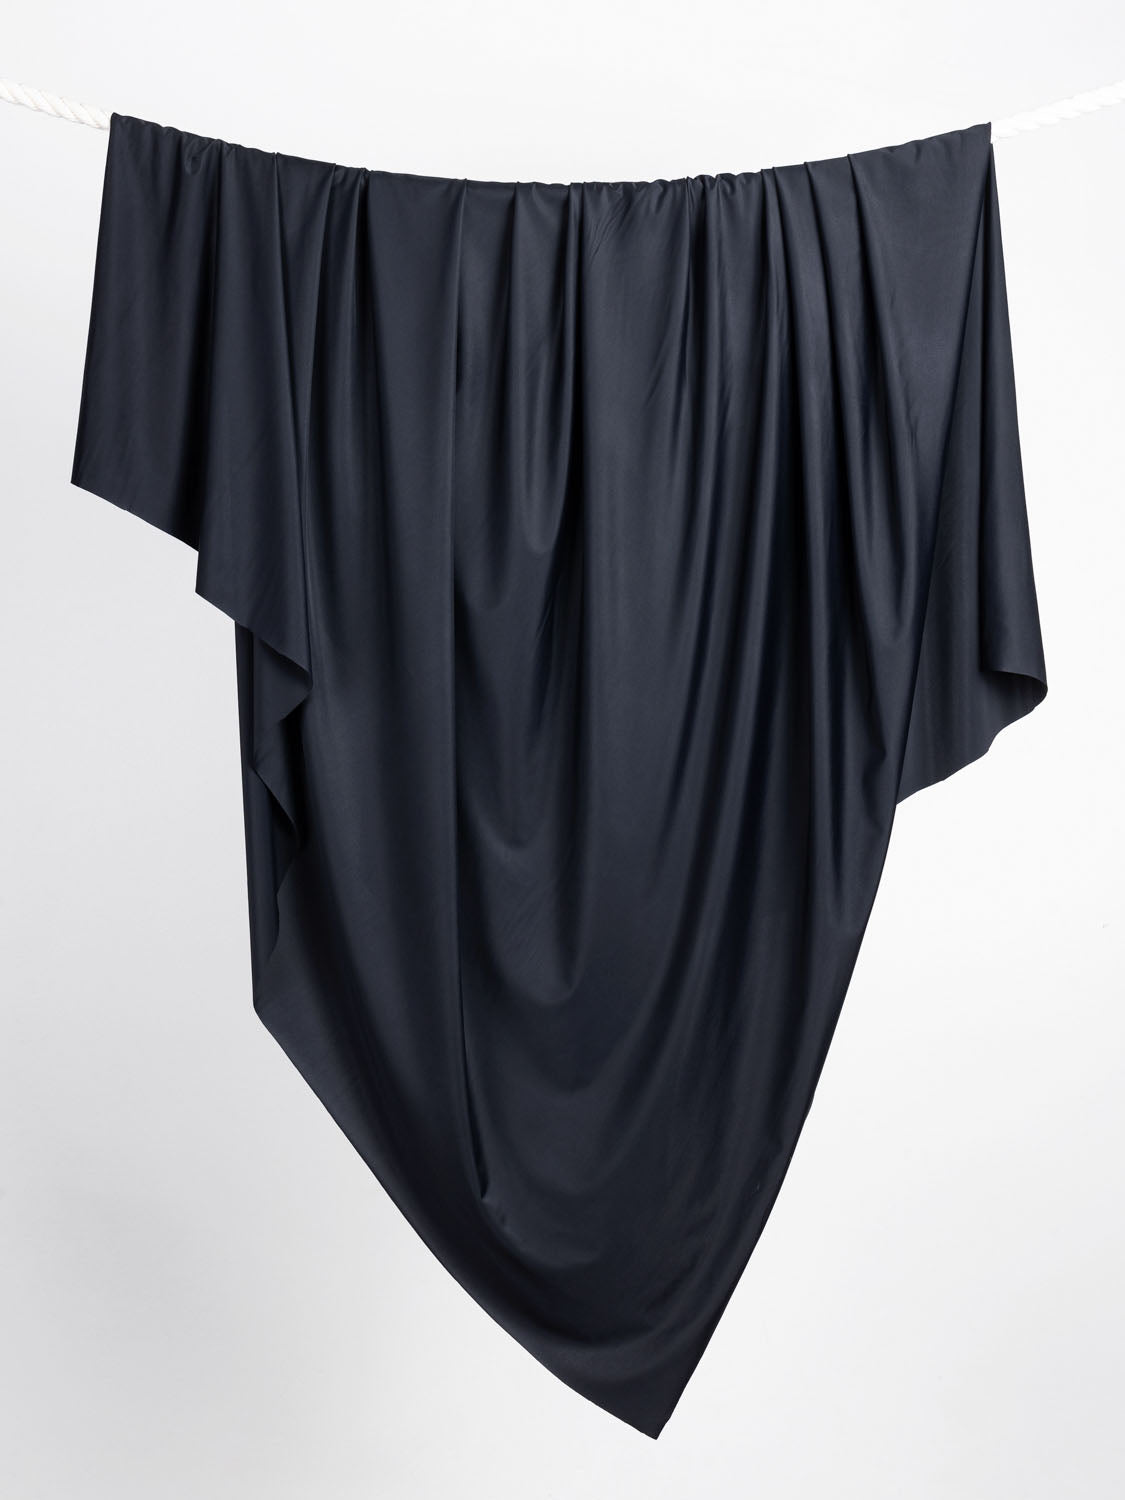 Black Polyamide Nylon Elastane Stretch Fabric Remnant (Remnant-170cmx60cm),  Fabric By The Yard, Fabric Scraps, Fabric Finds, Swimwear Fabric